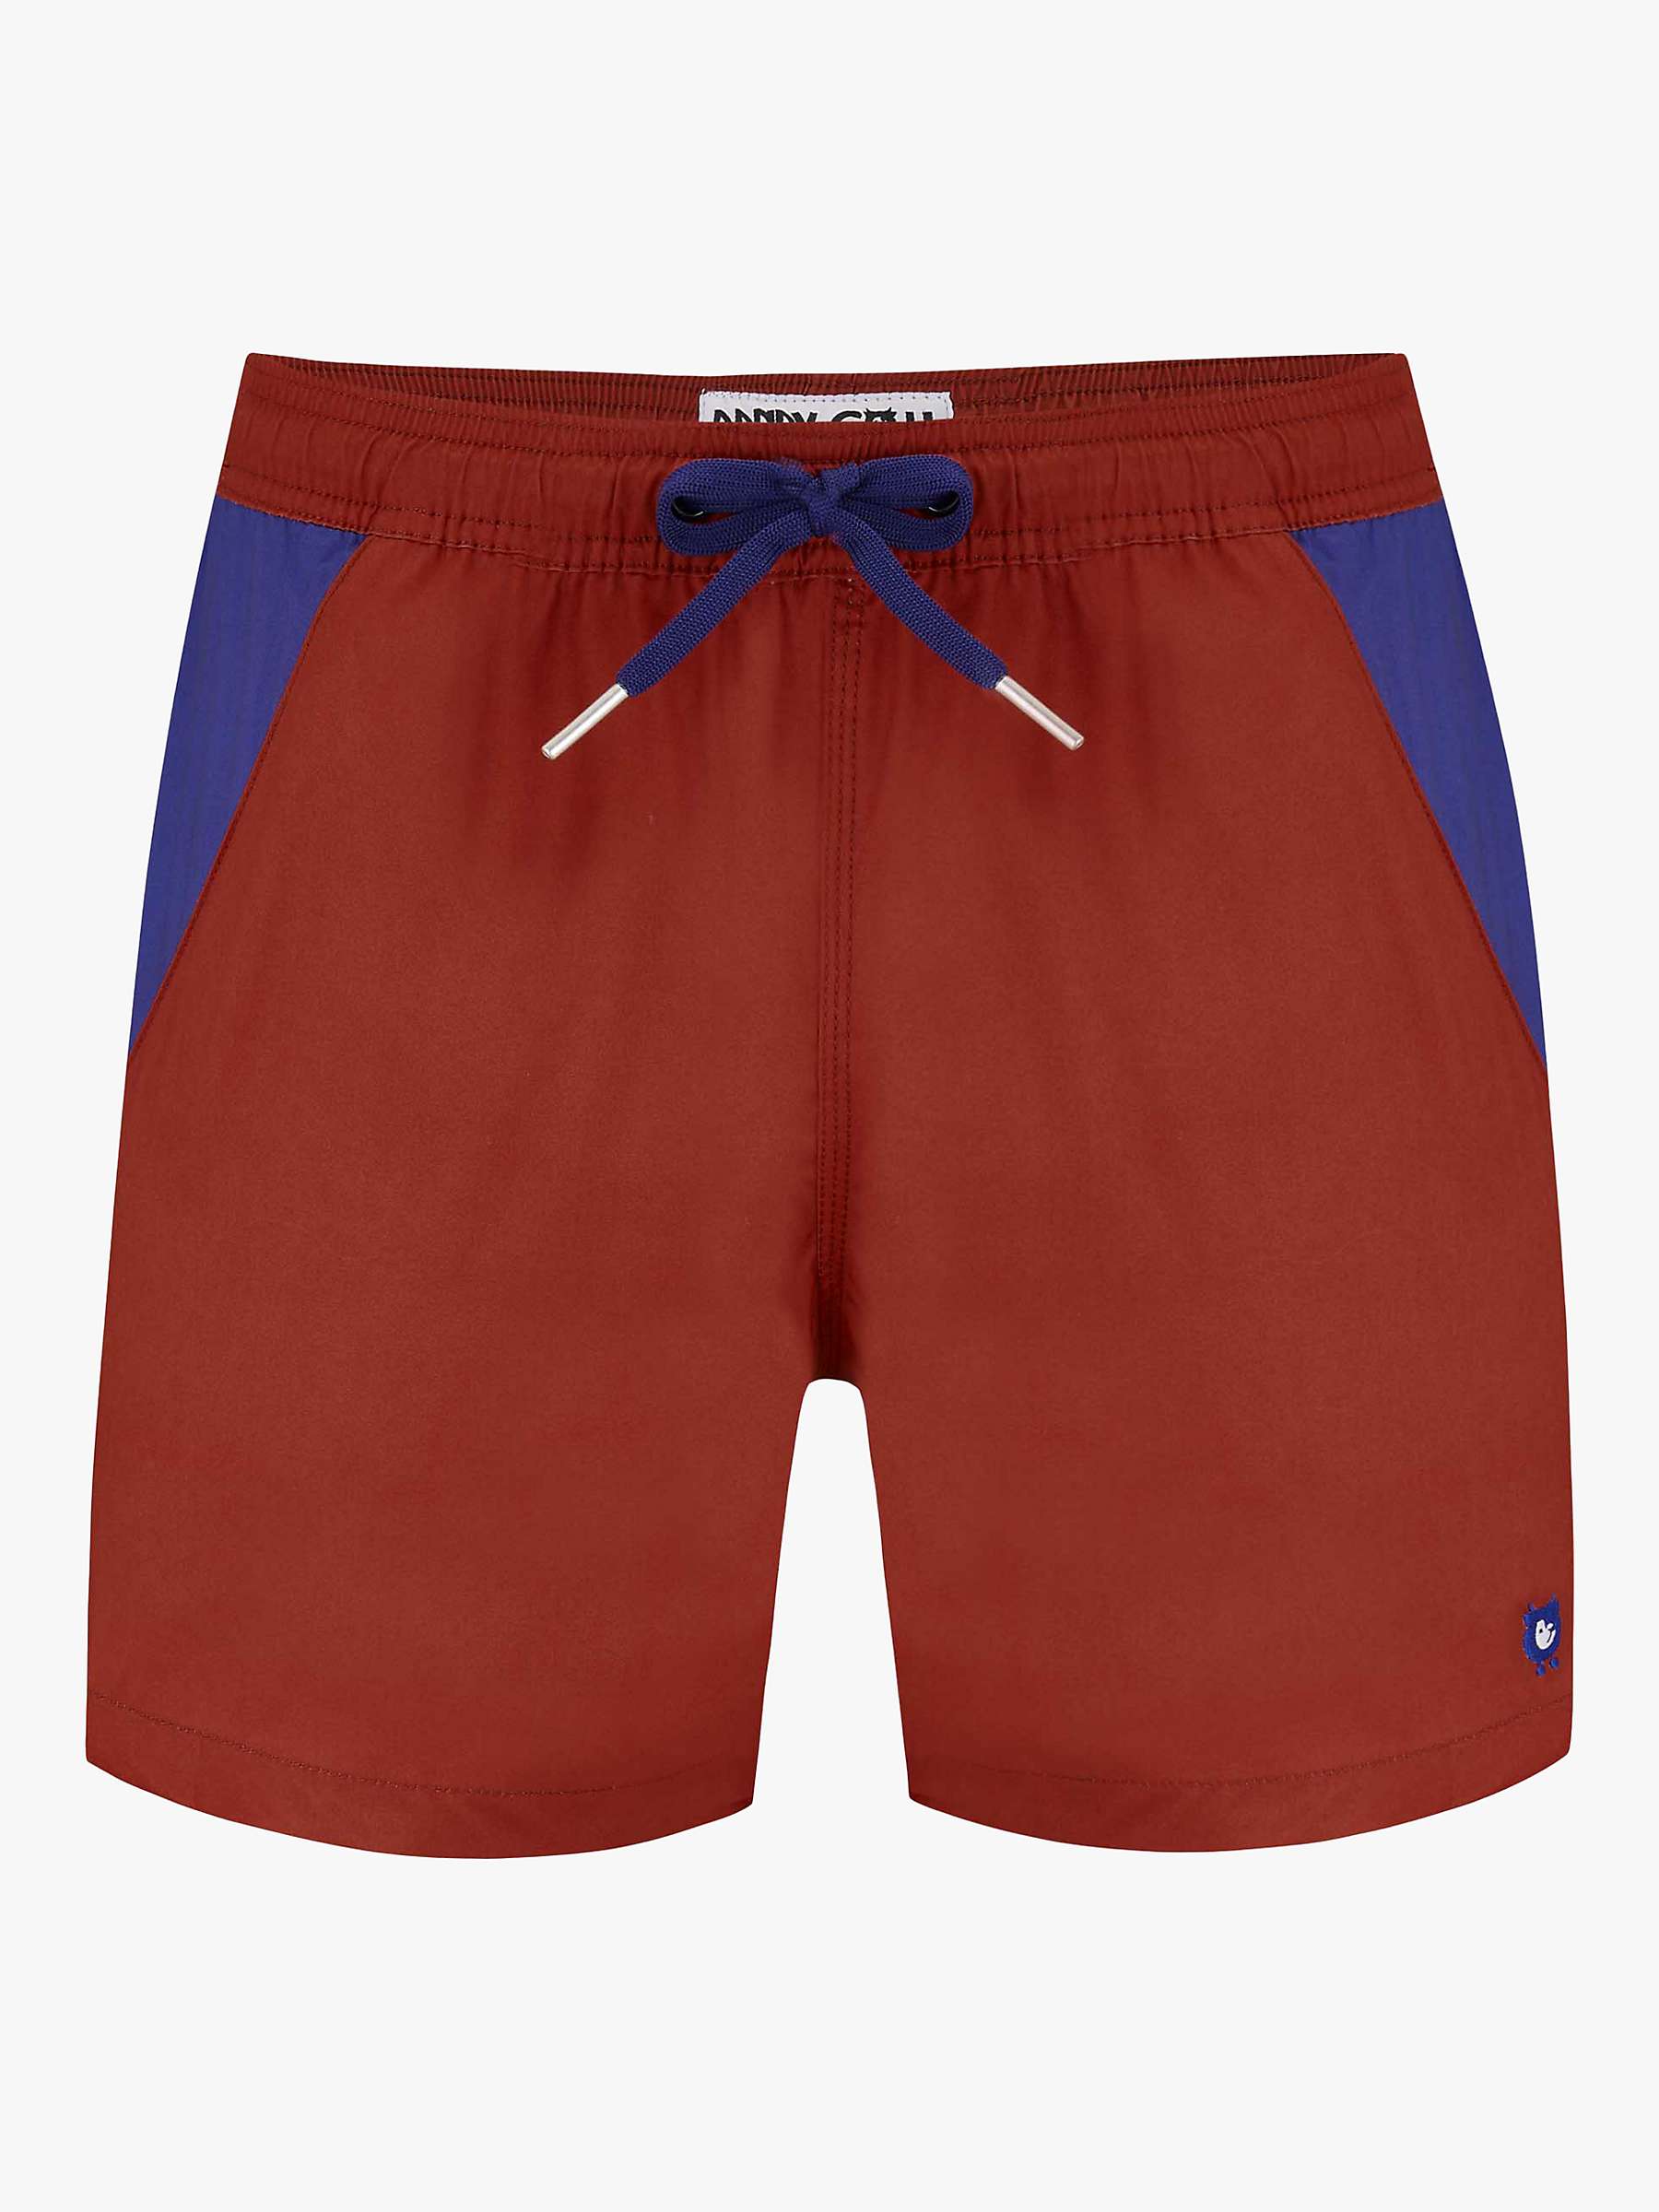 Buy Randy Cow Swim Shorts Online at johnlewis.com